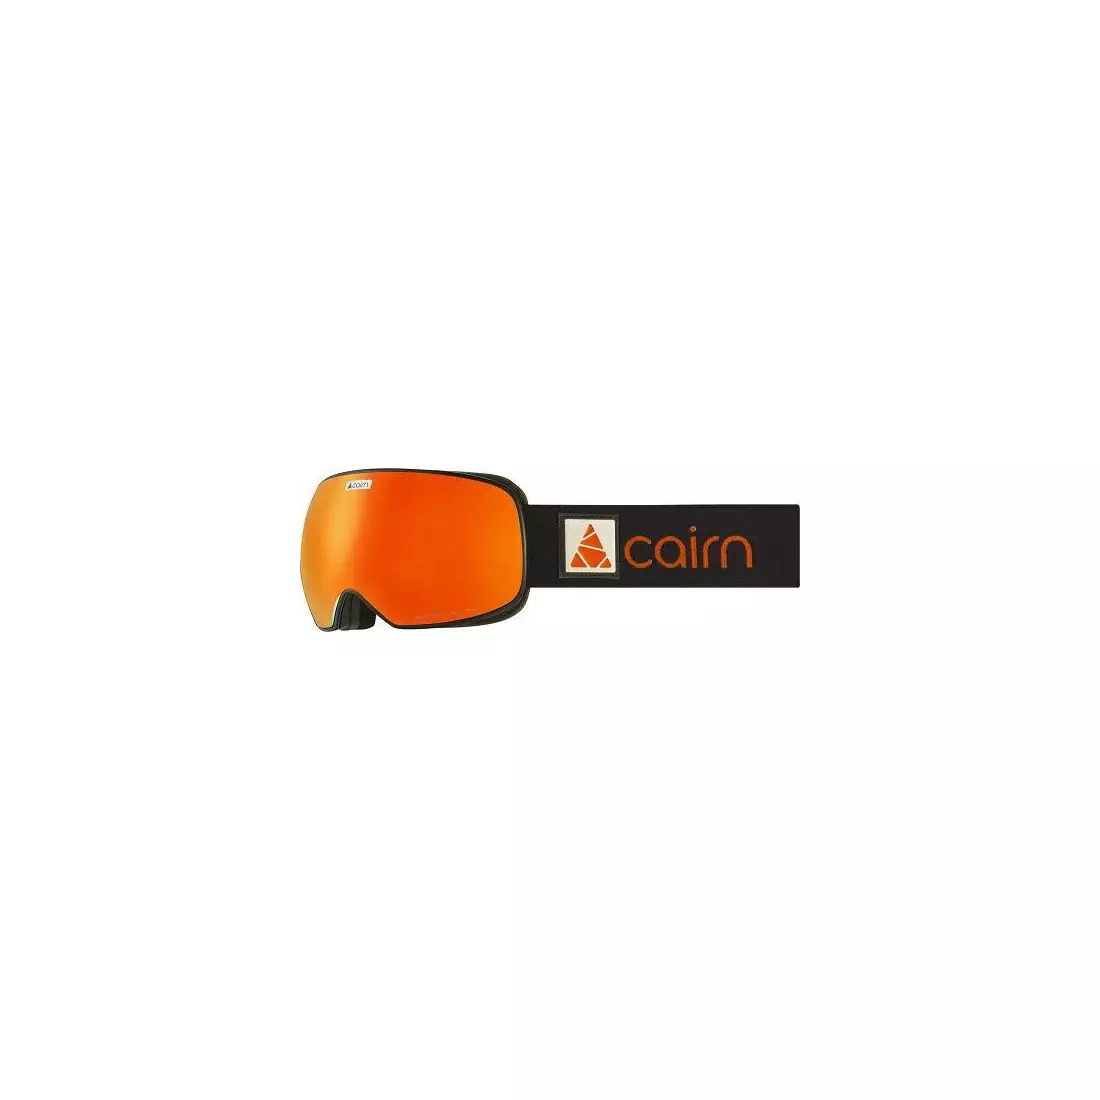 CAIRN gogle narciarskie/snowboardowe Gravity SPX3000 IUM Mat Black Orange 